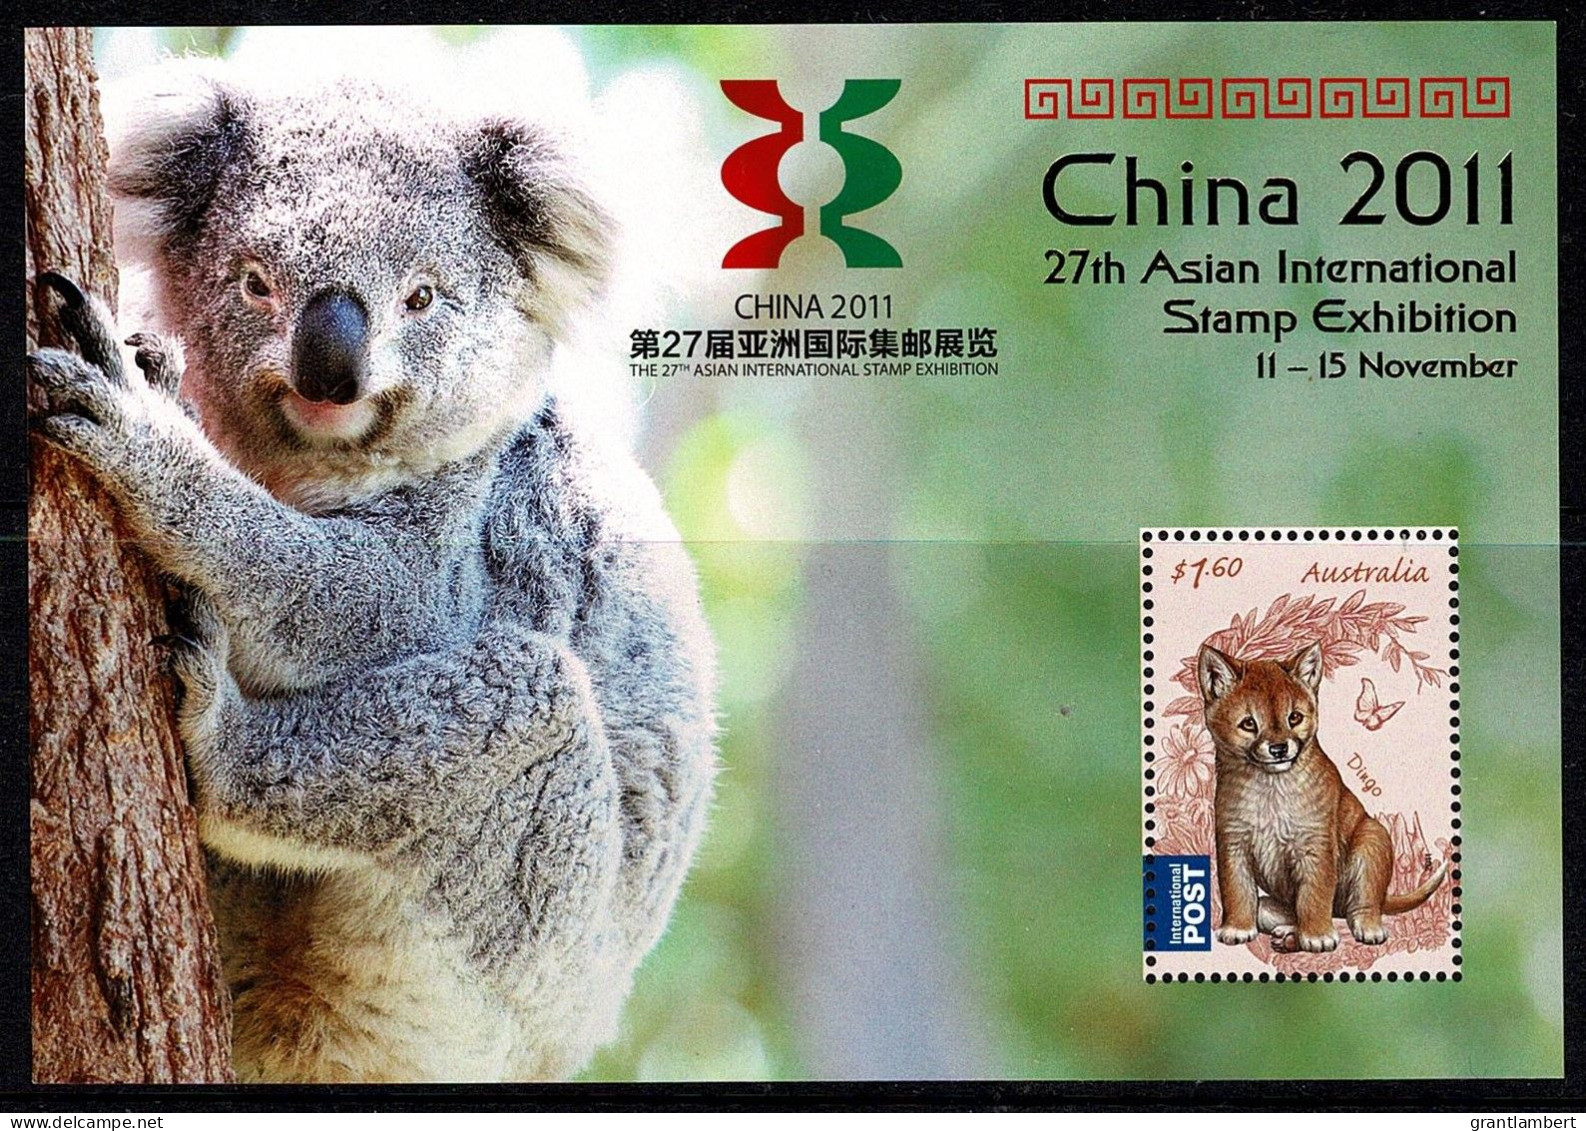 Australia 2011 China 2011 Exhibition Koala Minisheet MNH - Mint Stamps